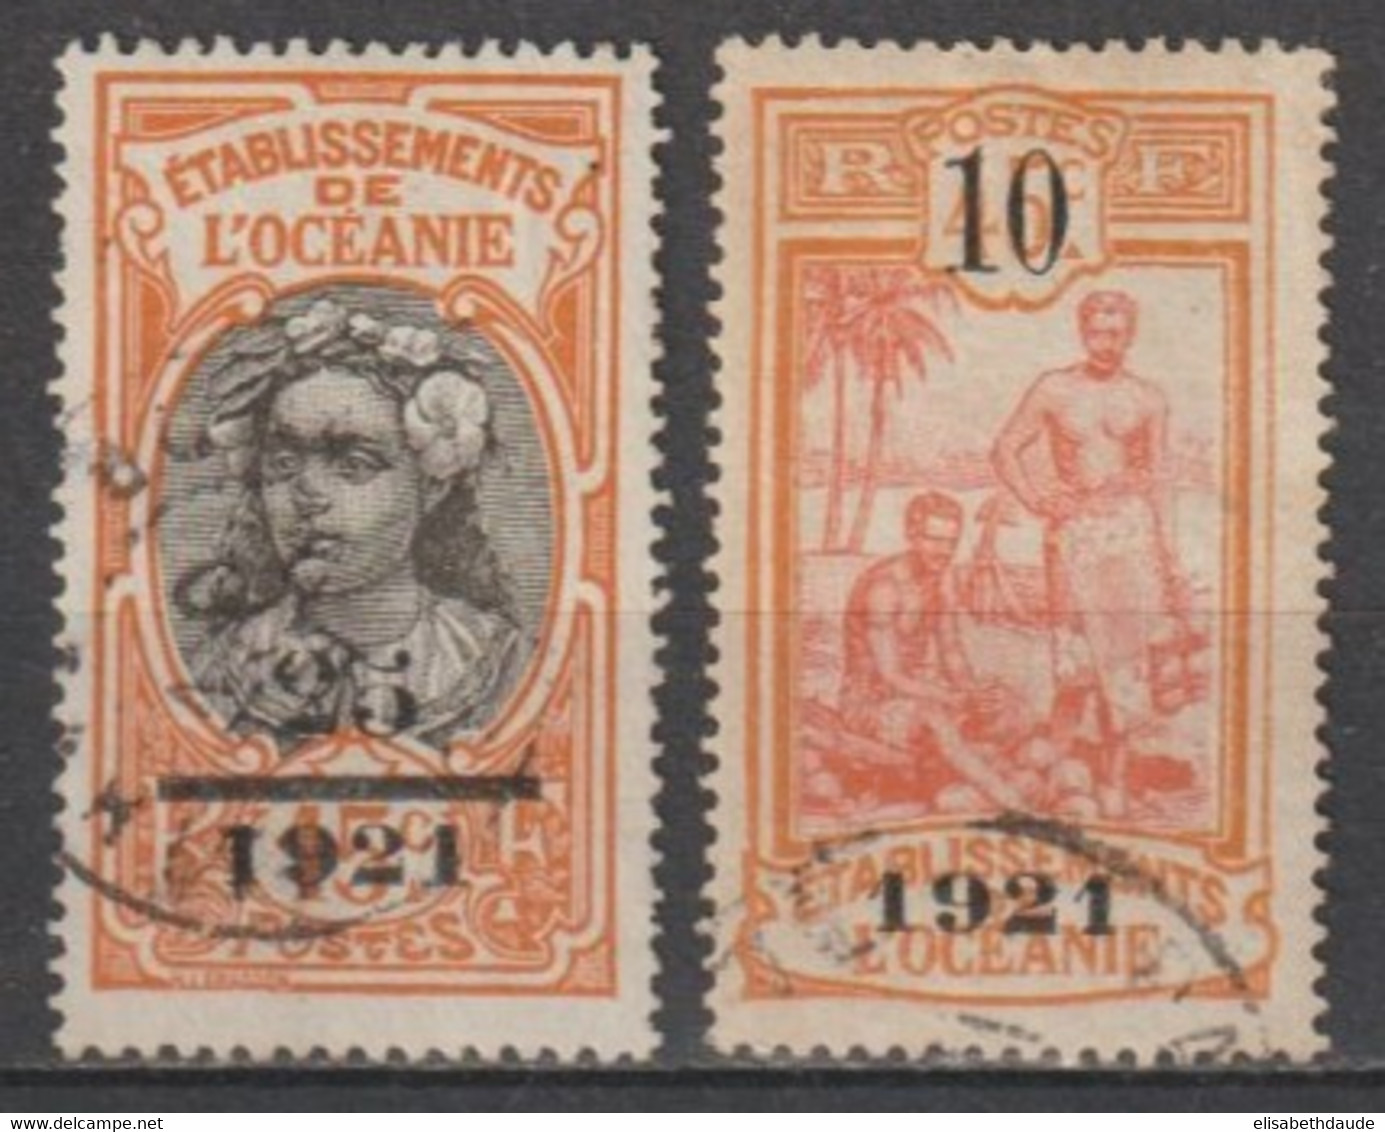 OCEANIE - 1921 - YVERT N°45/46 OBLITERES - COTE = 90 EUR - Oblitérés